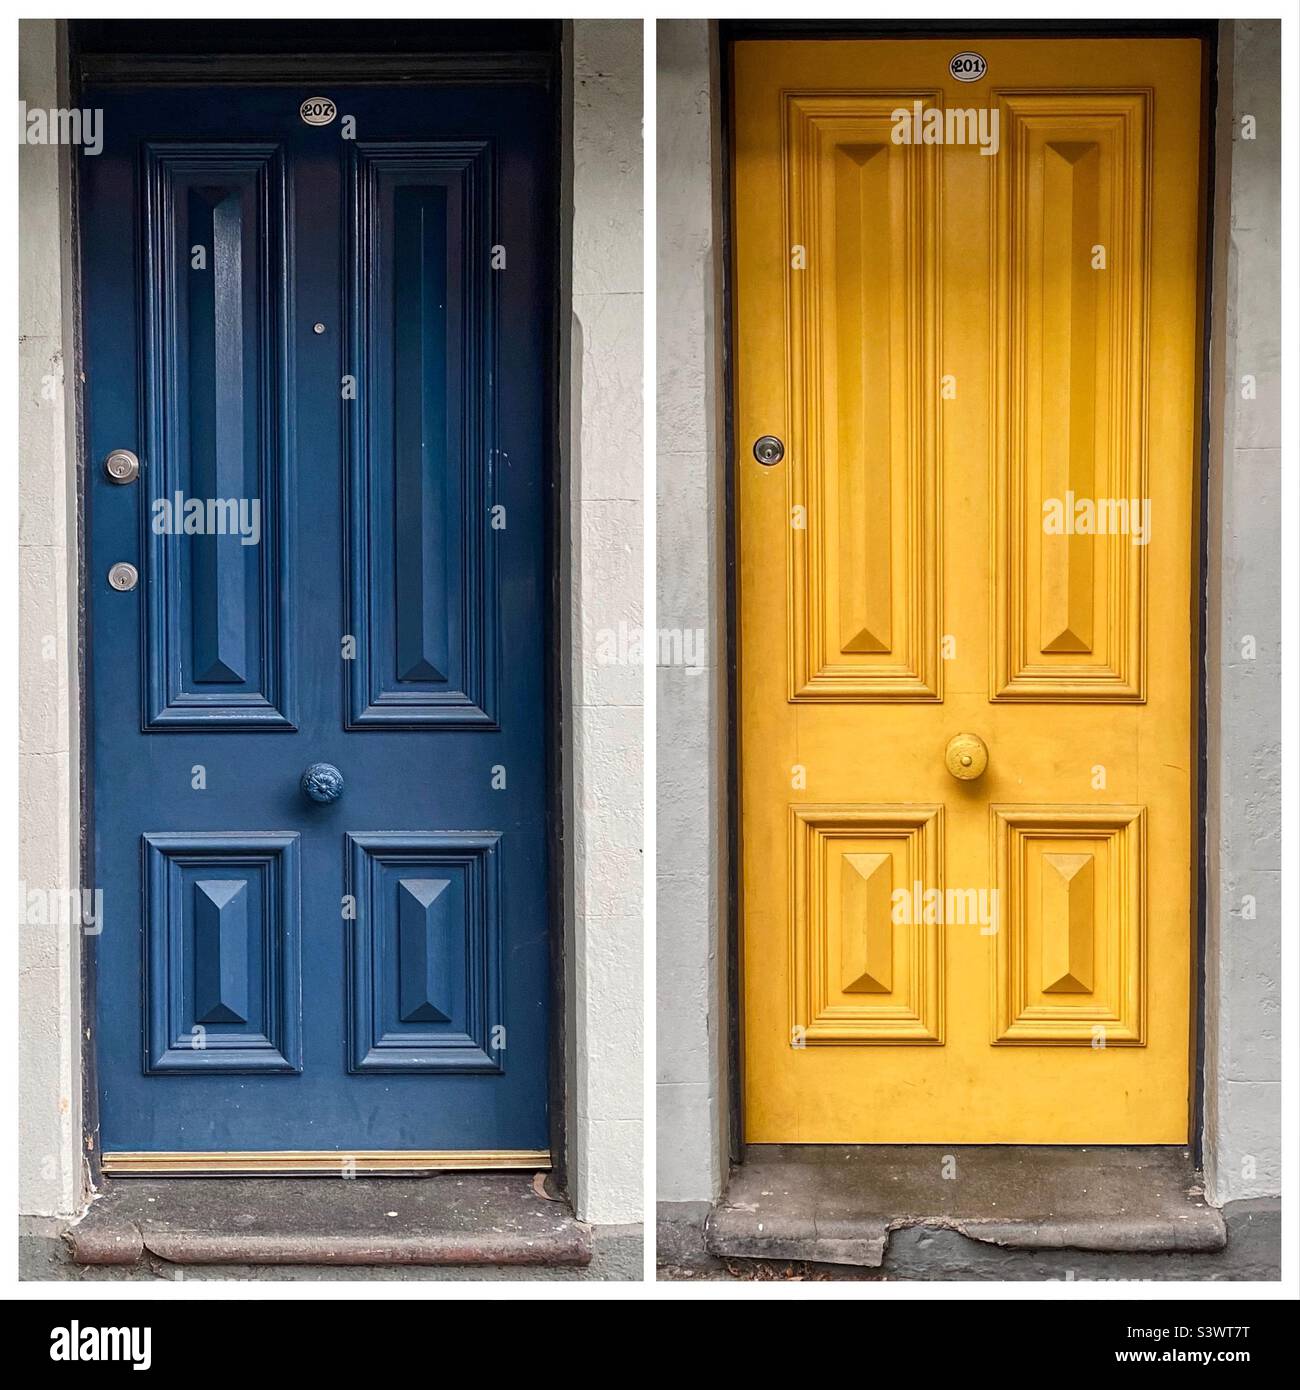 Two doors collage Stock Photo